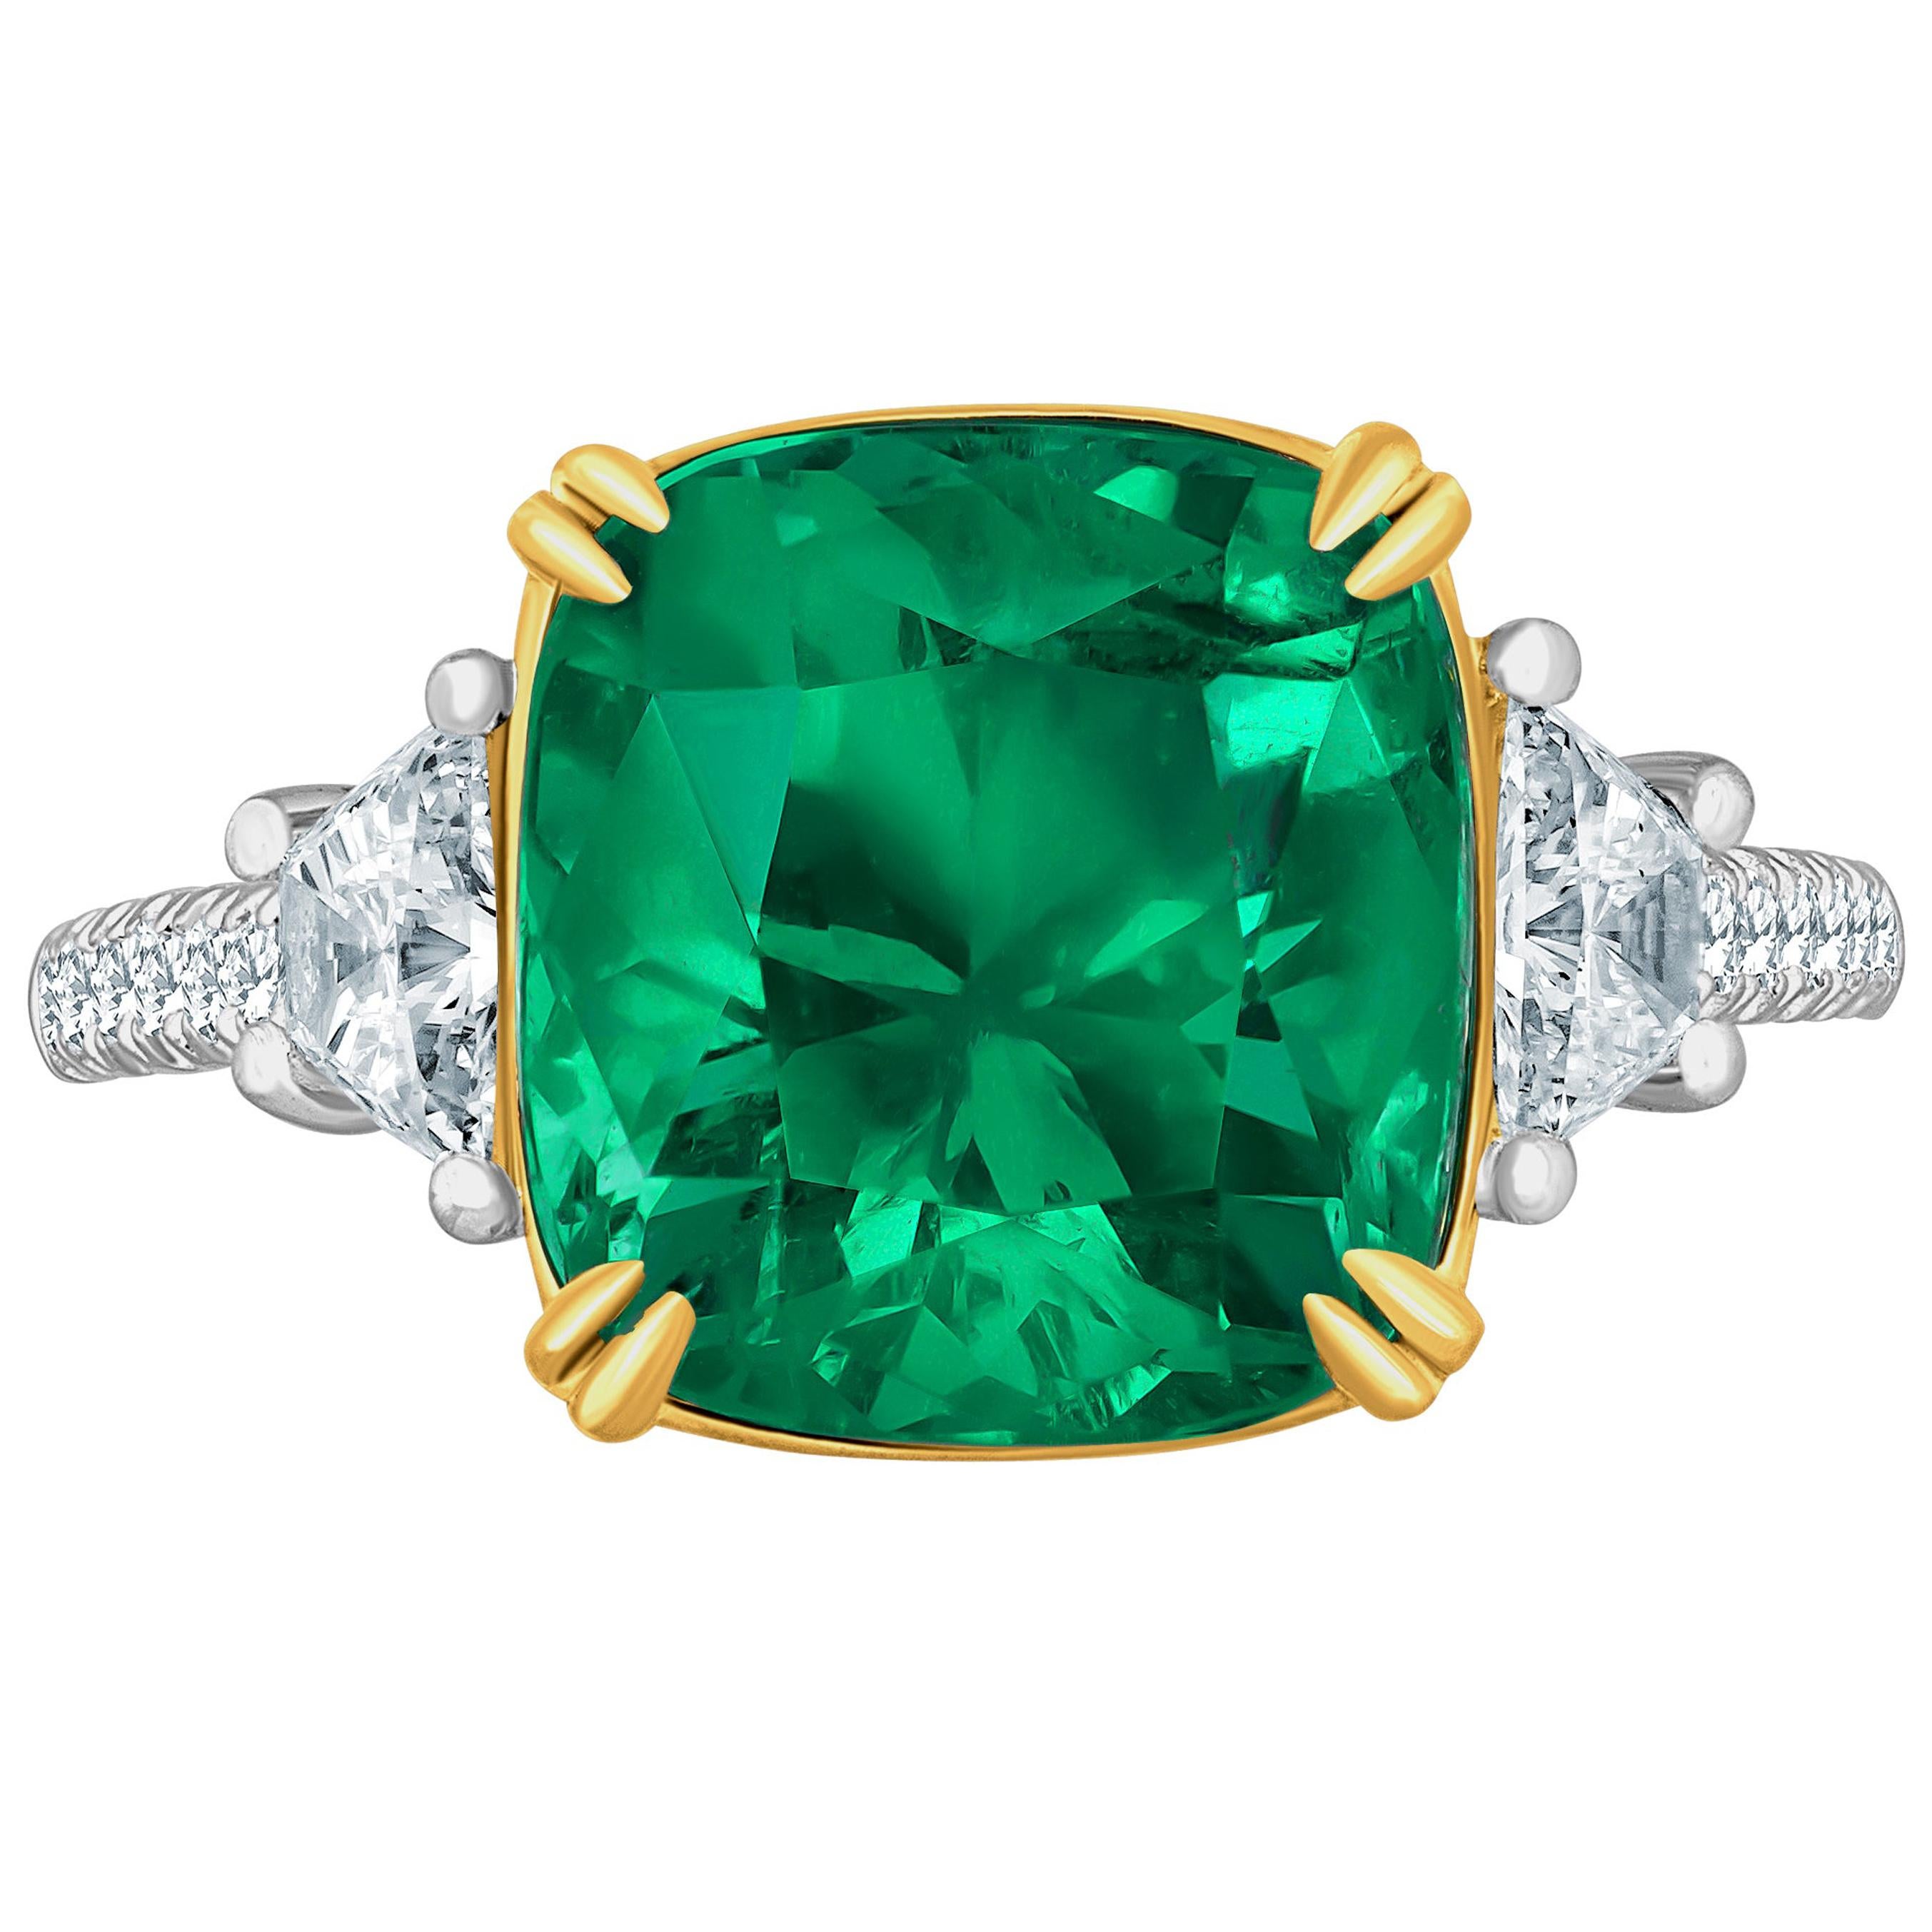 Emilio Jewelry Certified 6.68 Carat Colombian Emerald Diamond Ring